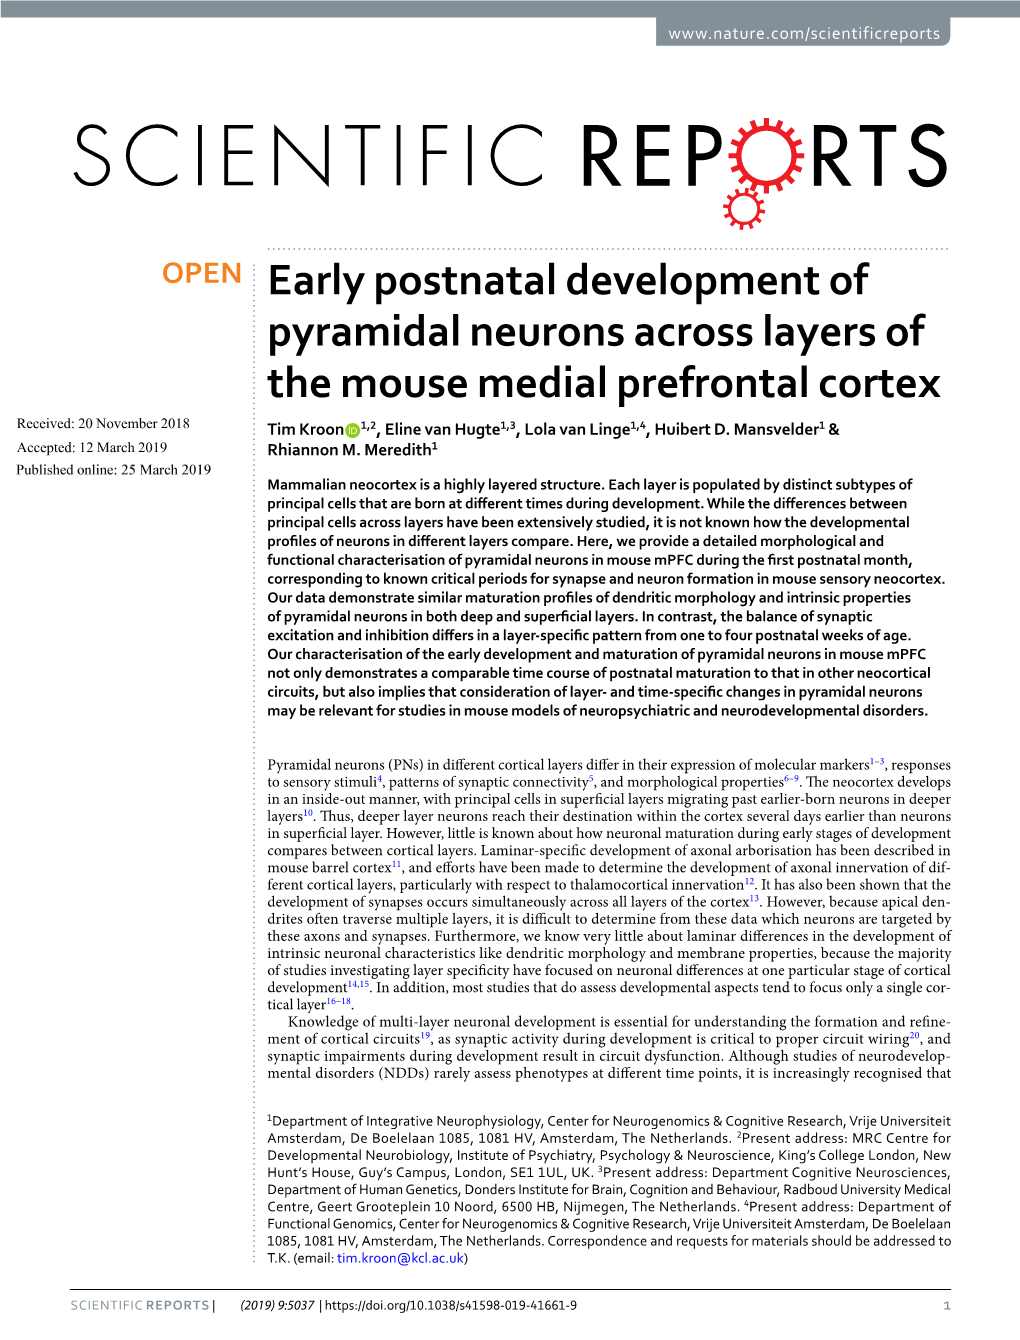 Early Postnatal Development of Pyramidal Neurons Across Layers Of